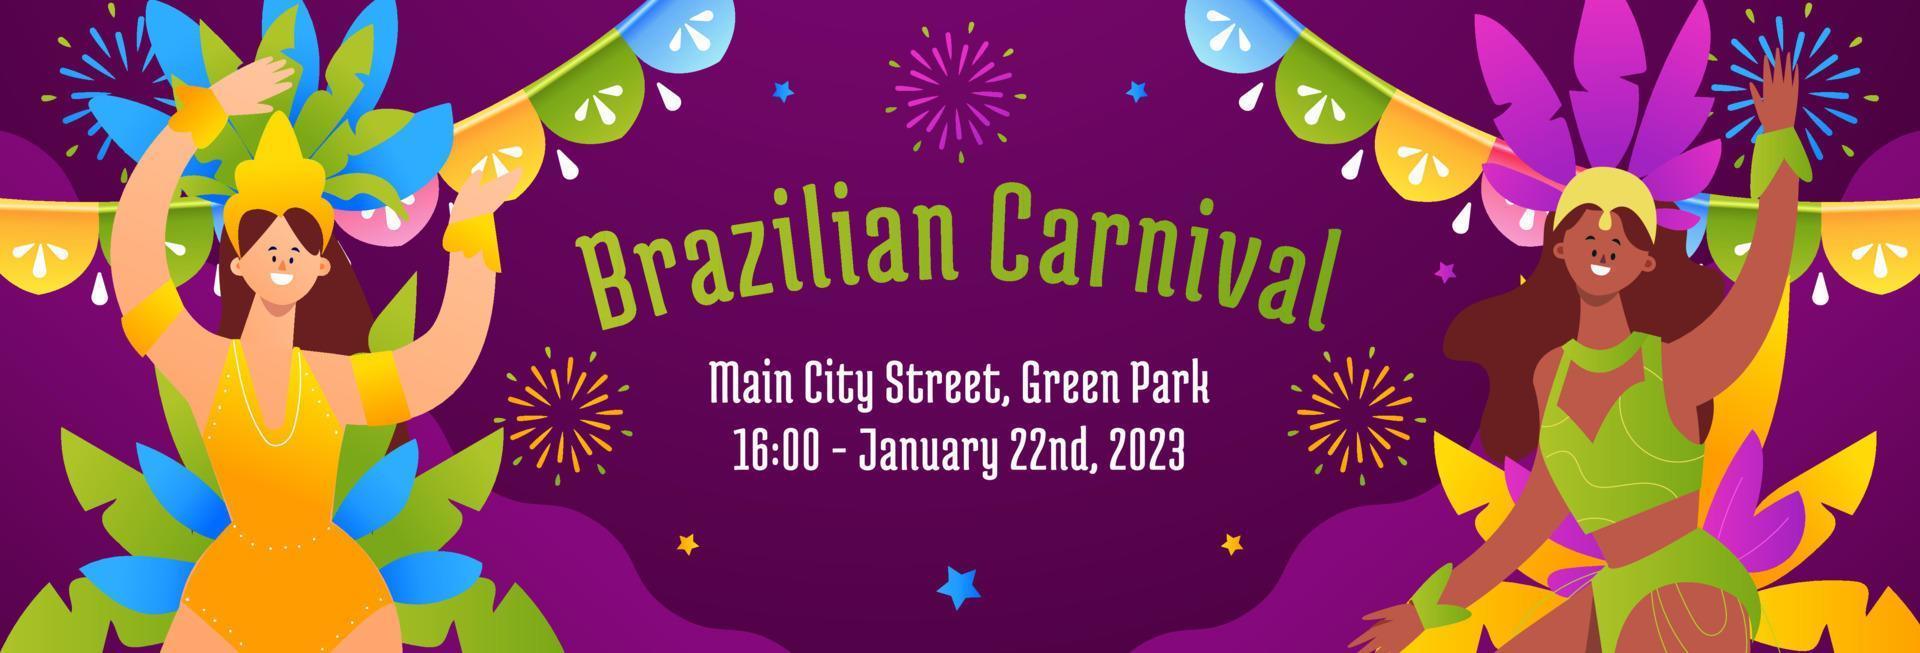 brazilian carnival horizontal banner vector flat design